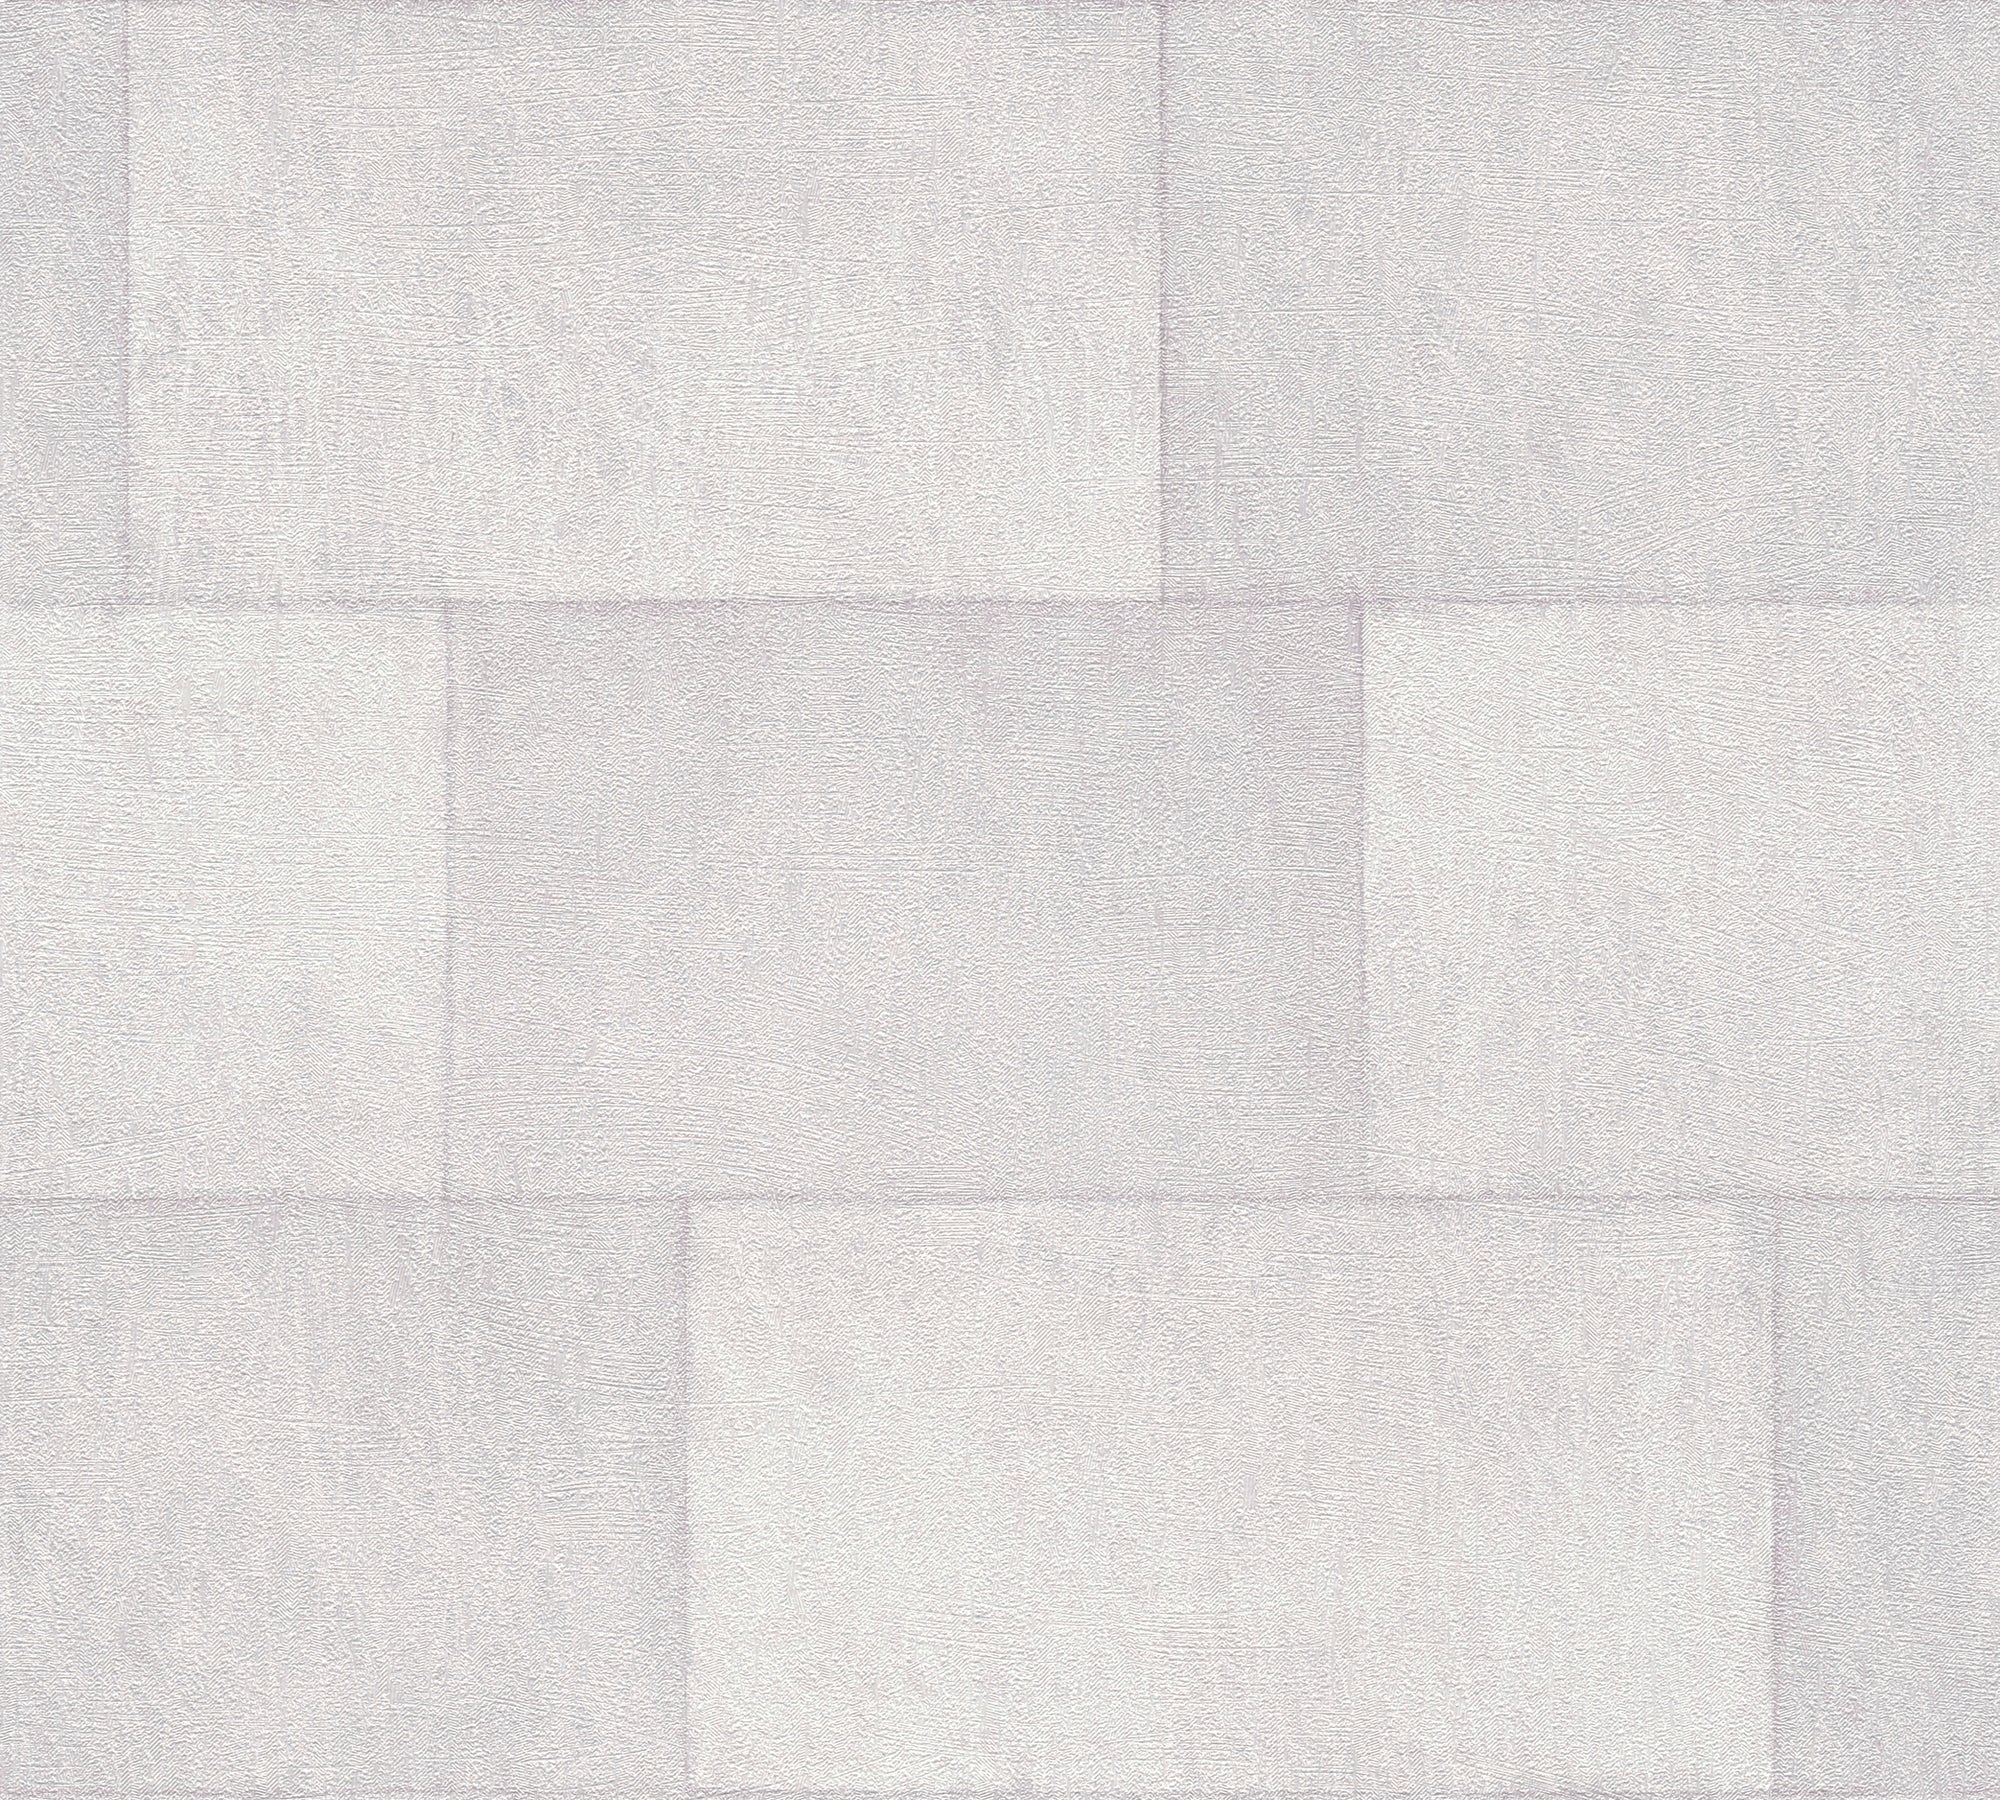 Titanium 3 - Tiles industrial wallpaper AS Creation Roll Light Grey  382012